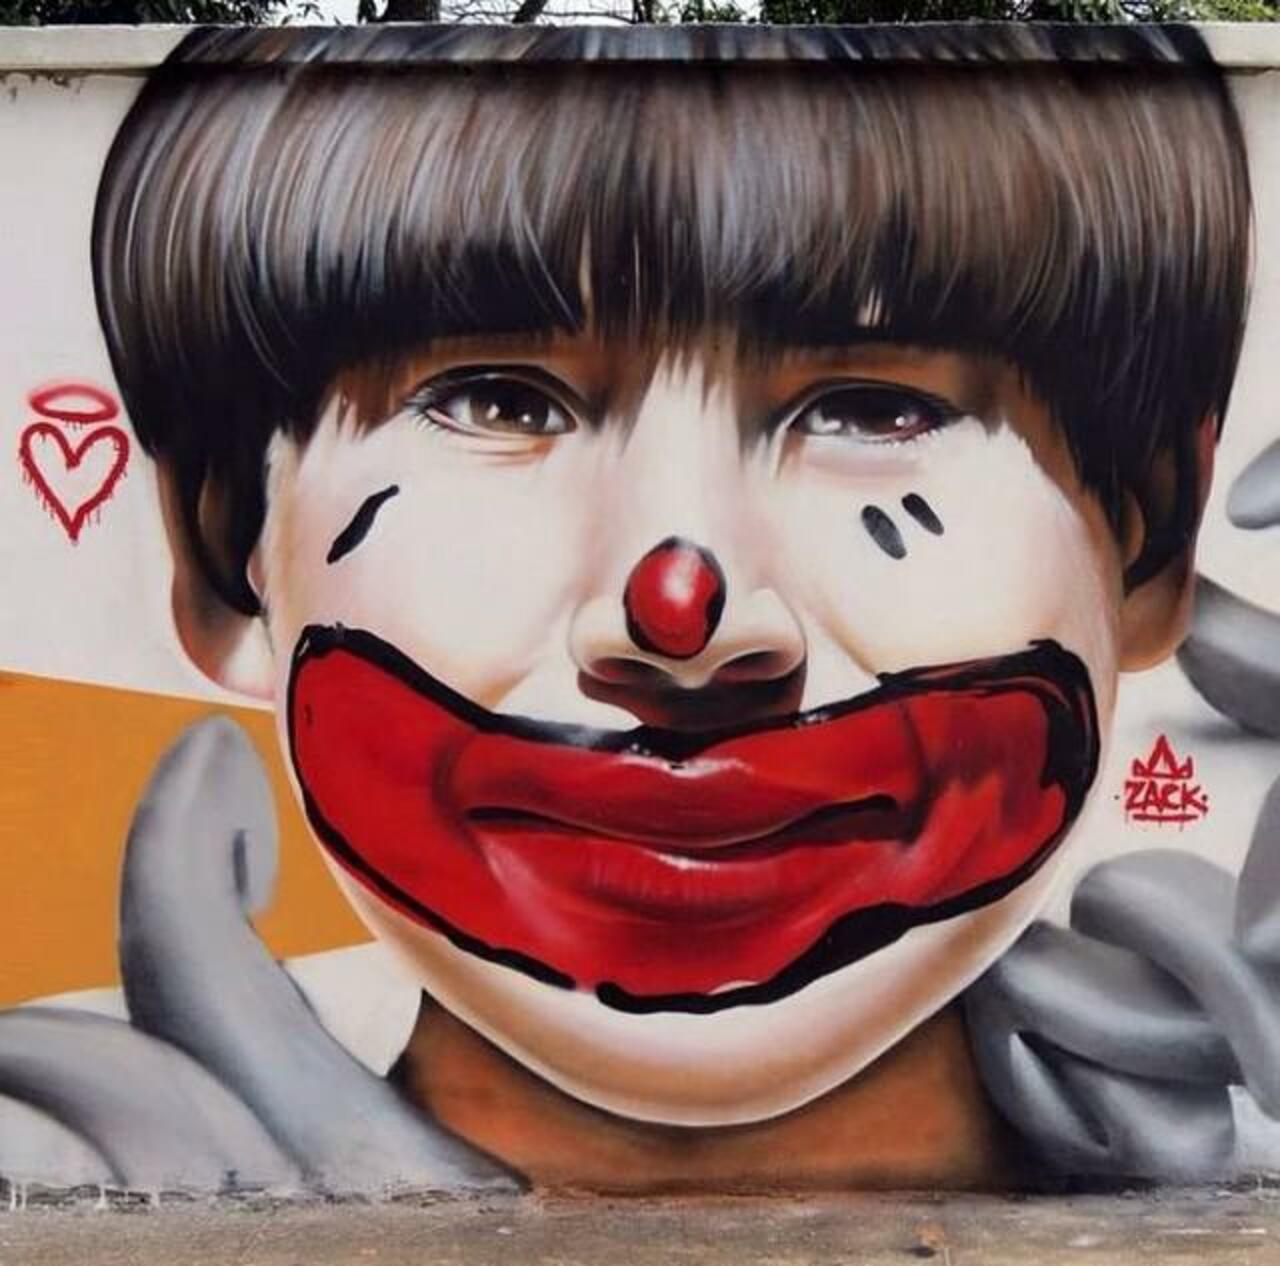 “@MyjoTown: Via @GoogleStreetArt: Unique Street Art by Nilo Zack - Brazil #art #mural #streetart #graffiti  http://t.co/dM4o7feT9t”